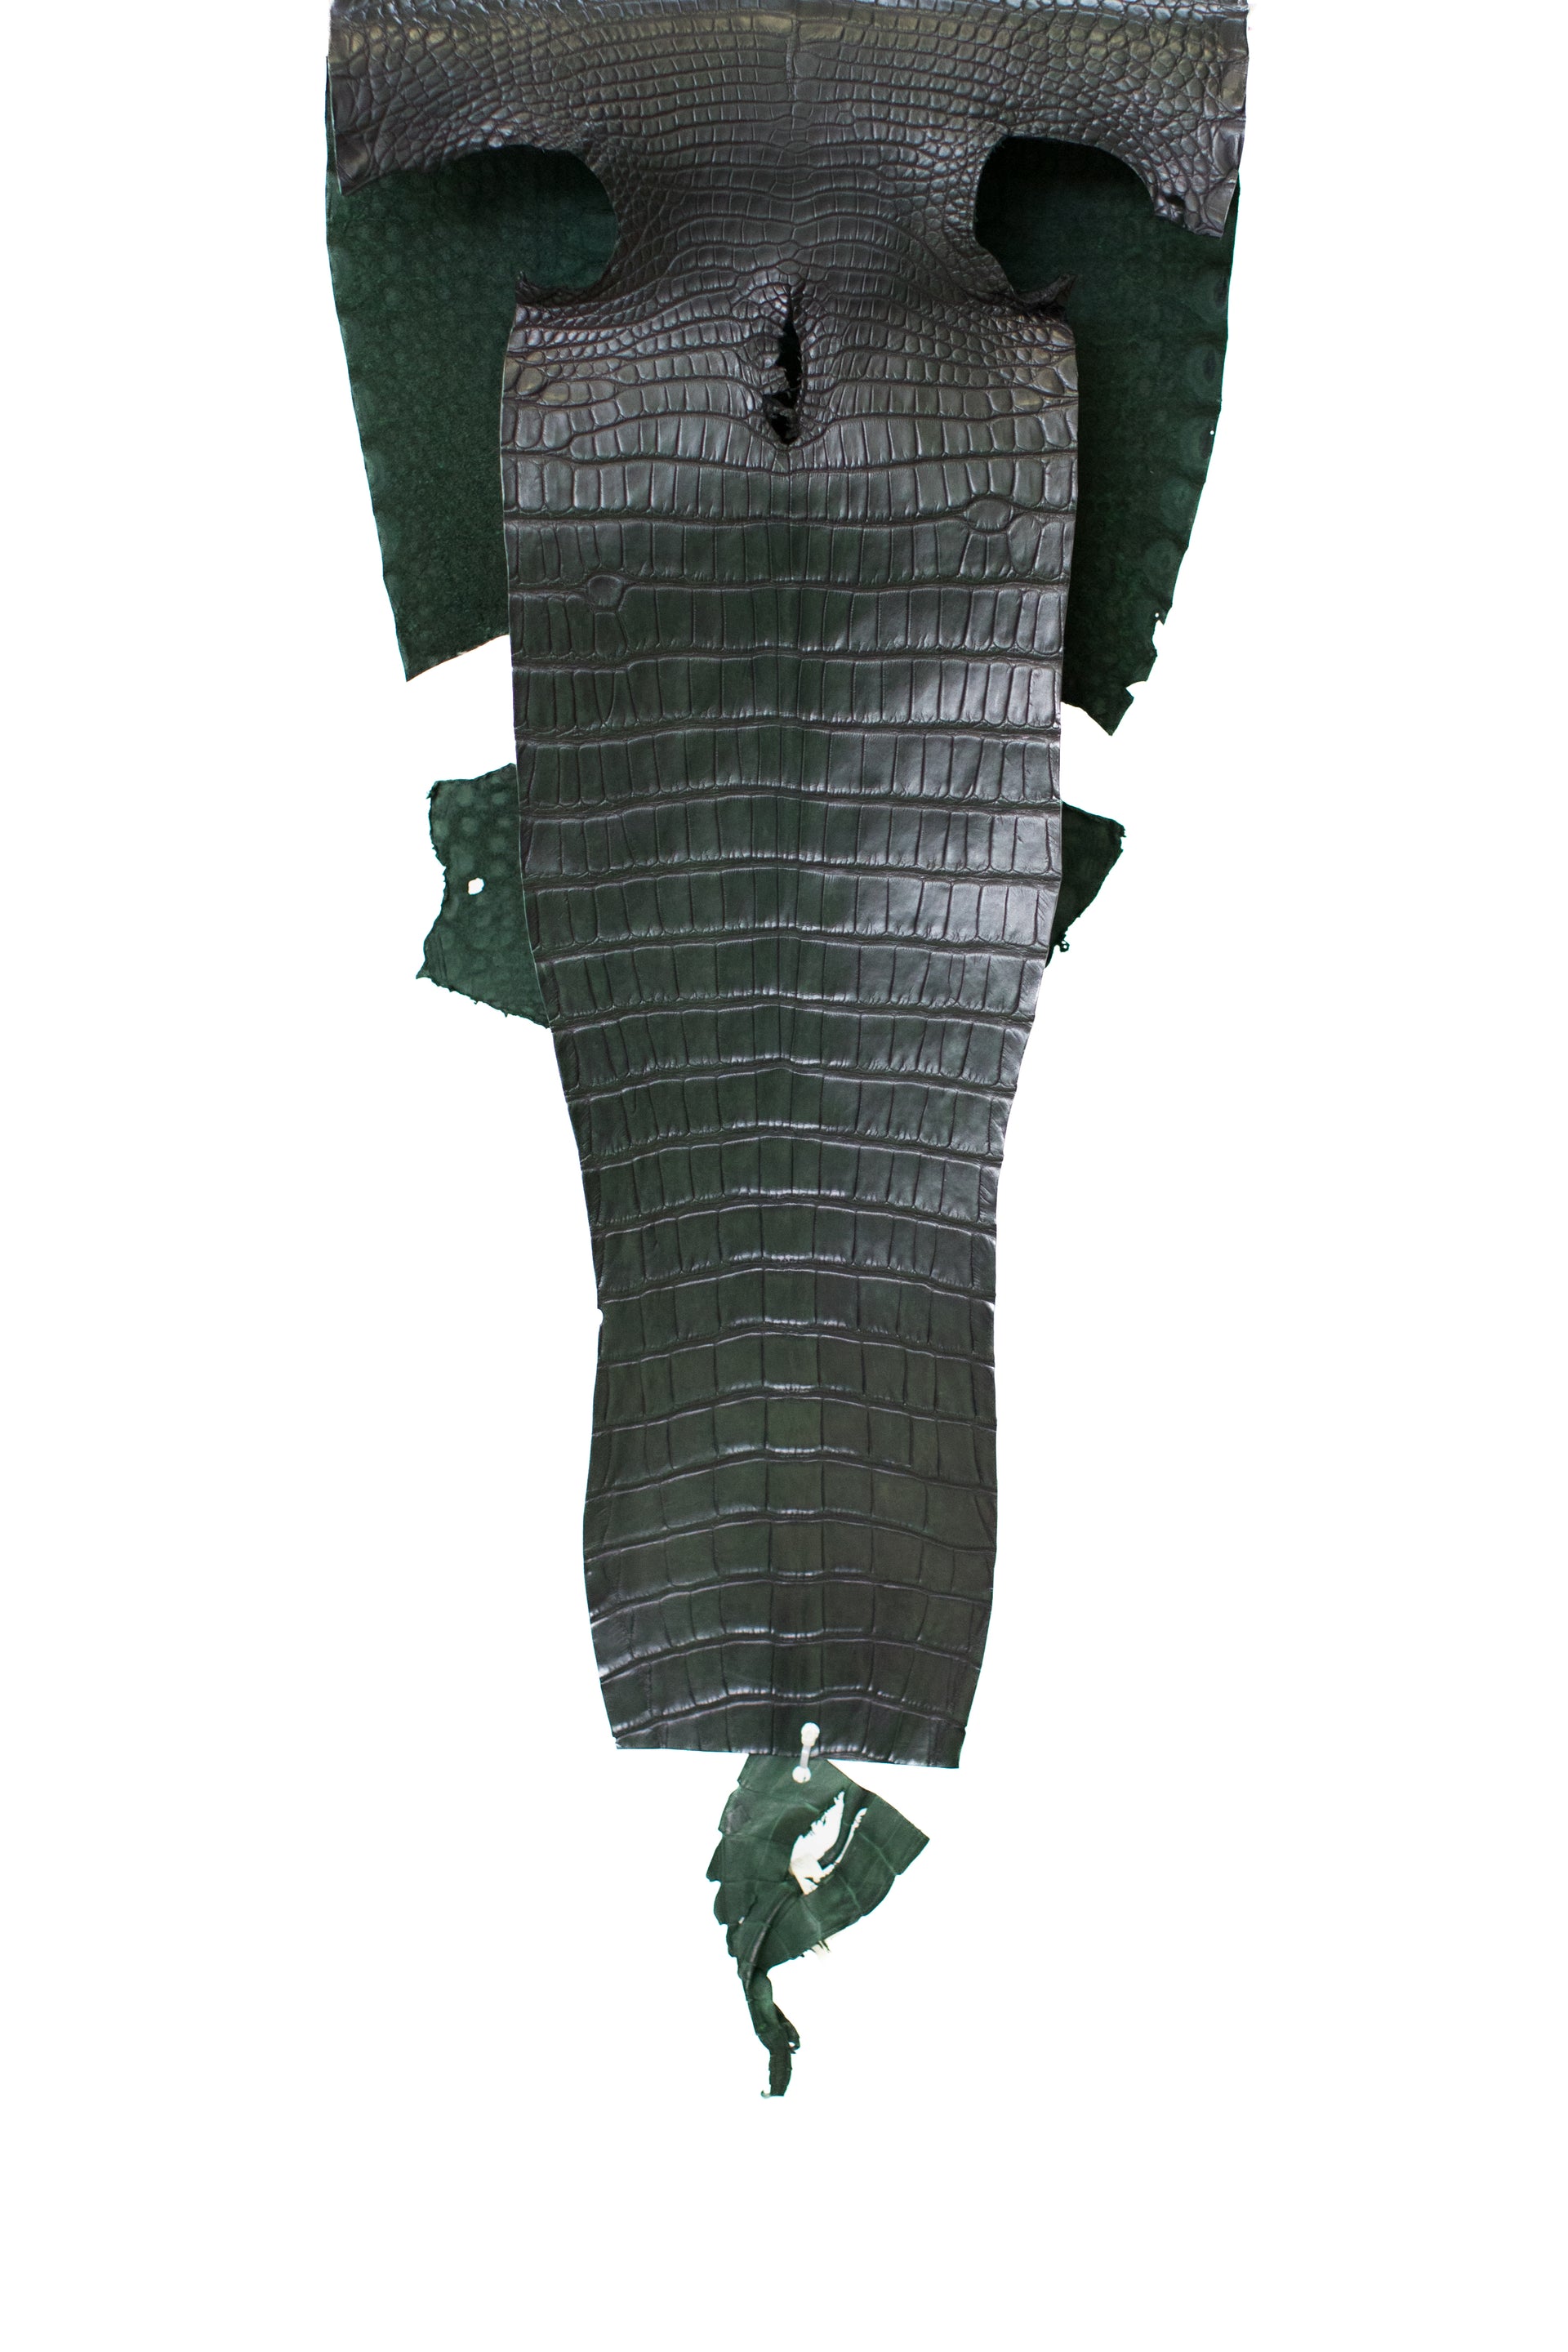 31 cm Grade 1 Forest Green/ Black Antique Farm American Alligator Leather - Tag: LS20-0375978